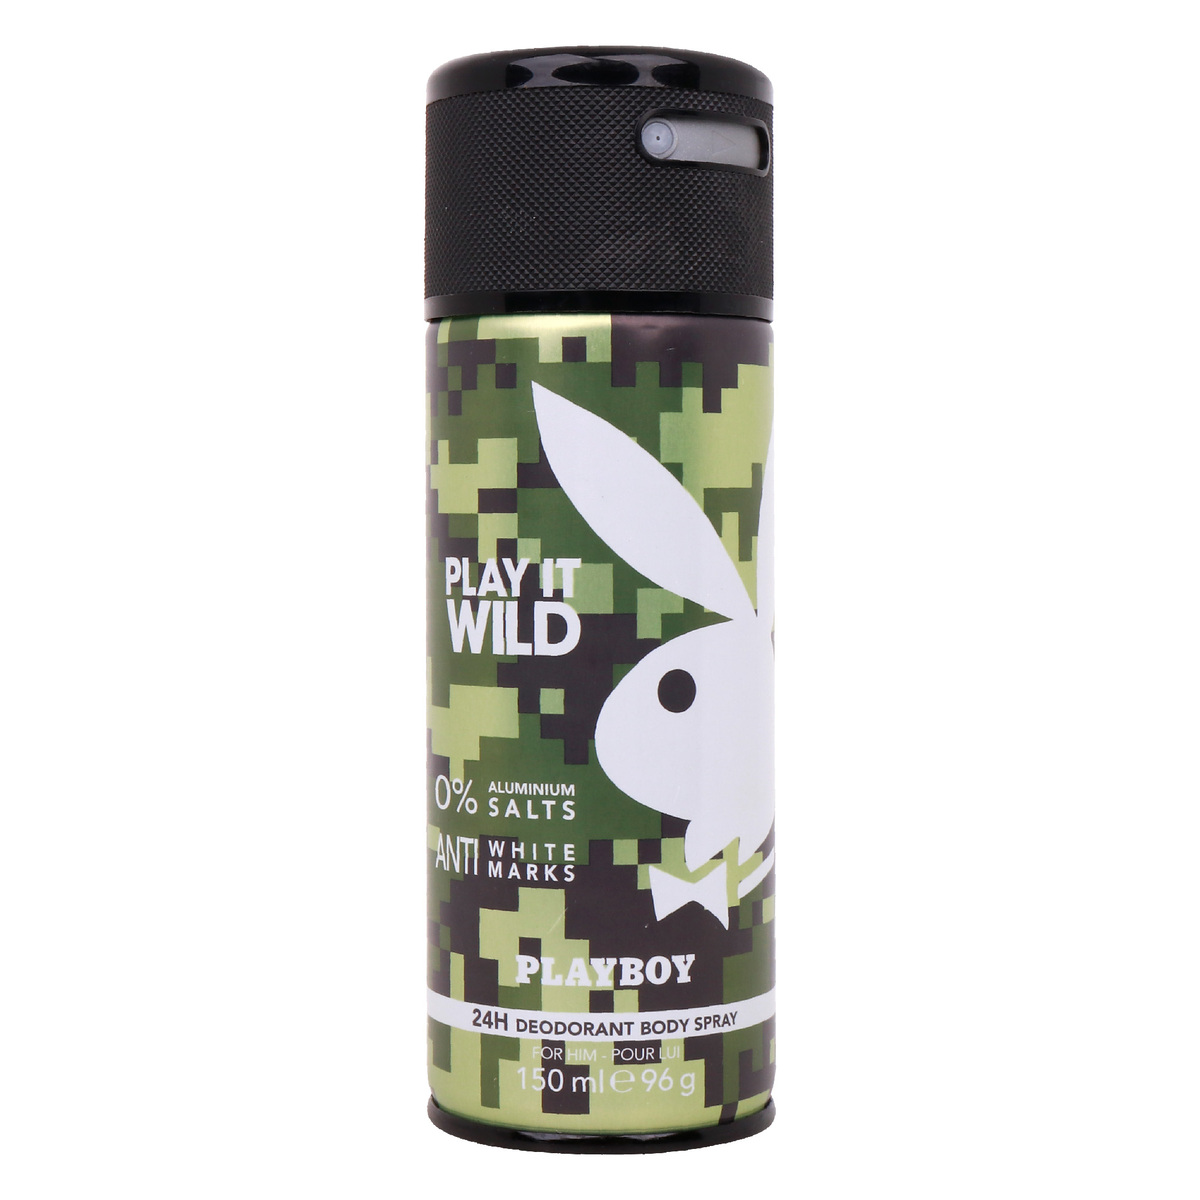 Playboy Play It Wild Deodorant Body Spray For Men 150 ml